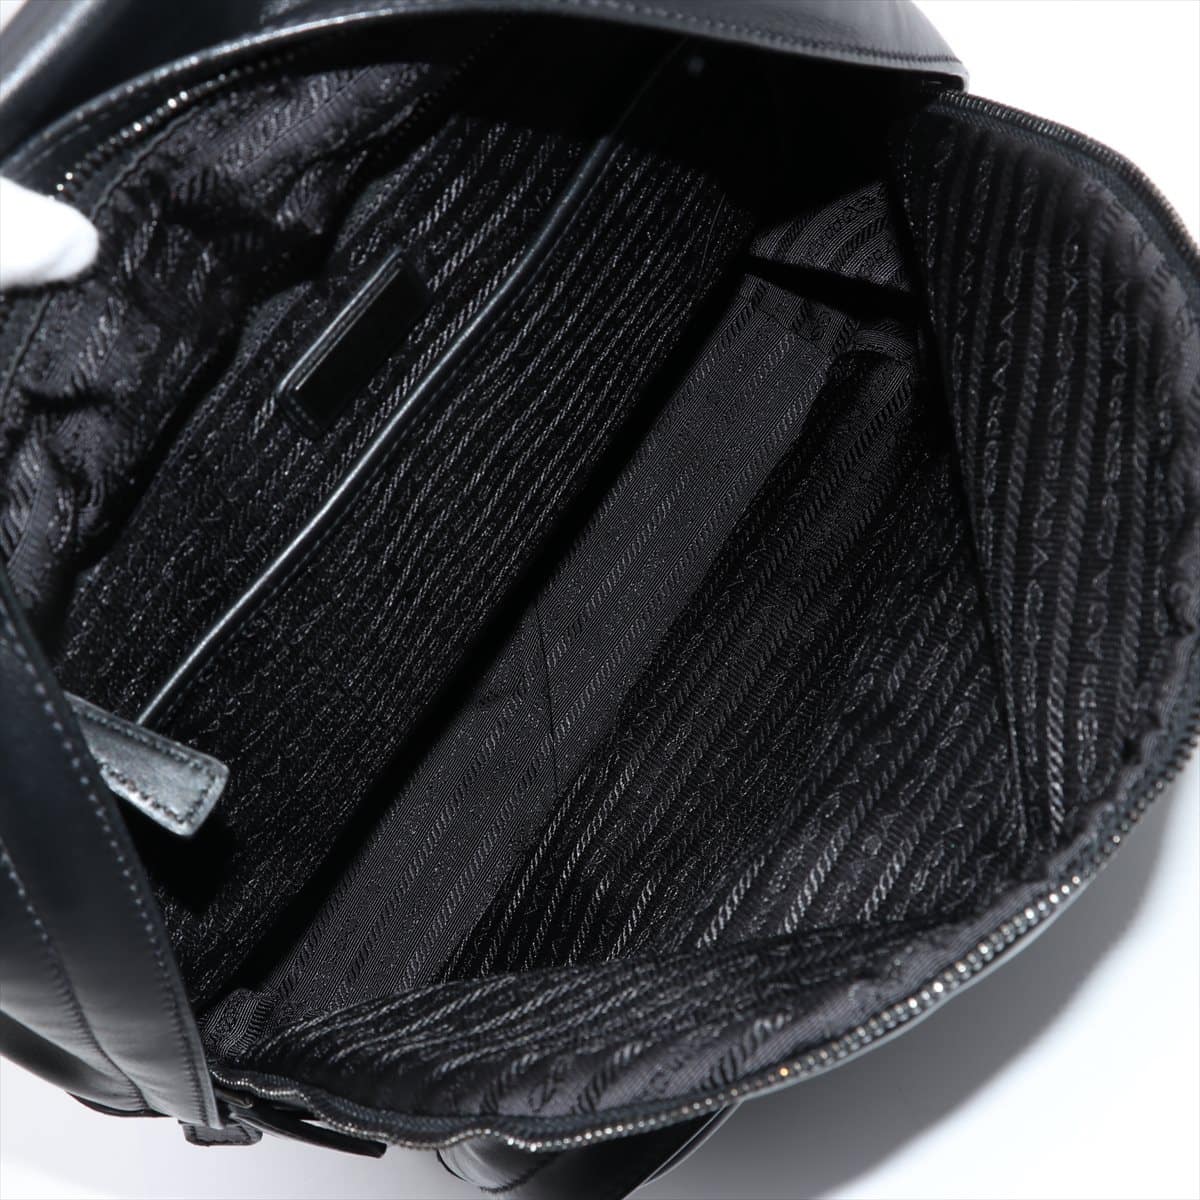 Prada Leather Backpack Black 2VZ066 Cracked leather edge paint